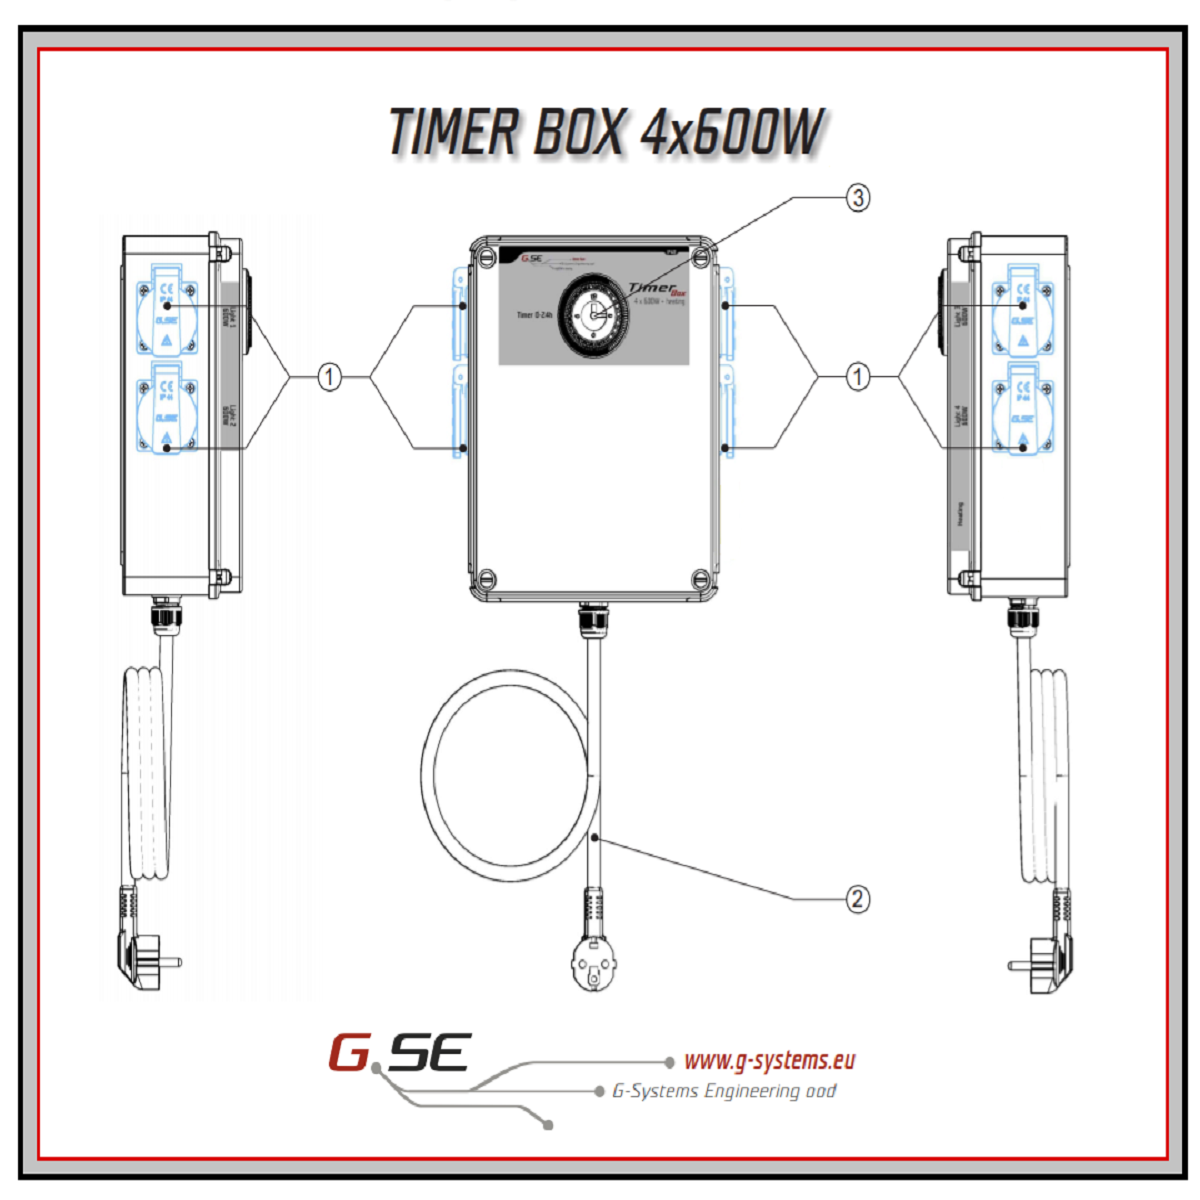 Minuterie GSE Timer Box 4x600w et prise chauffage